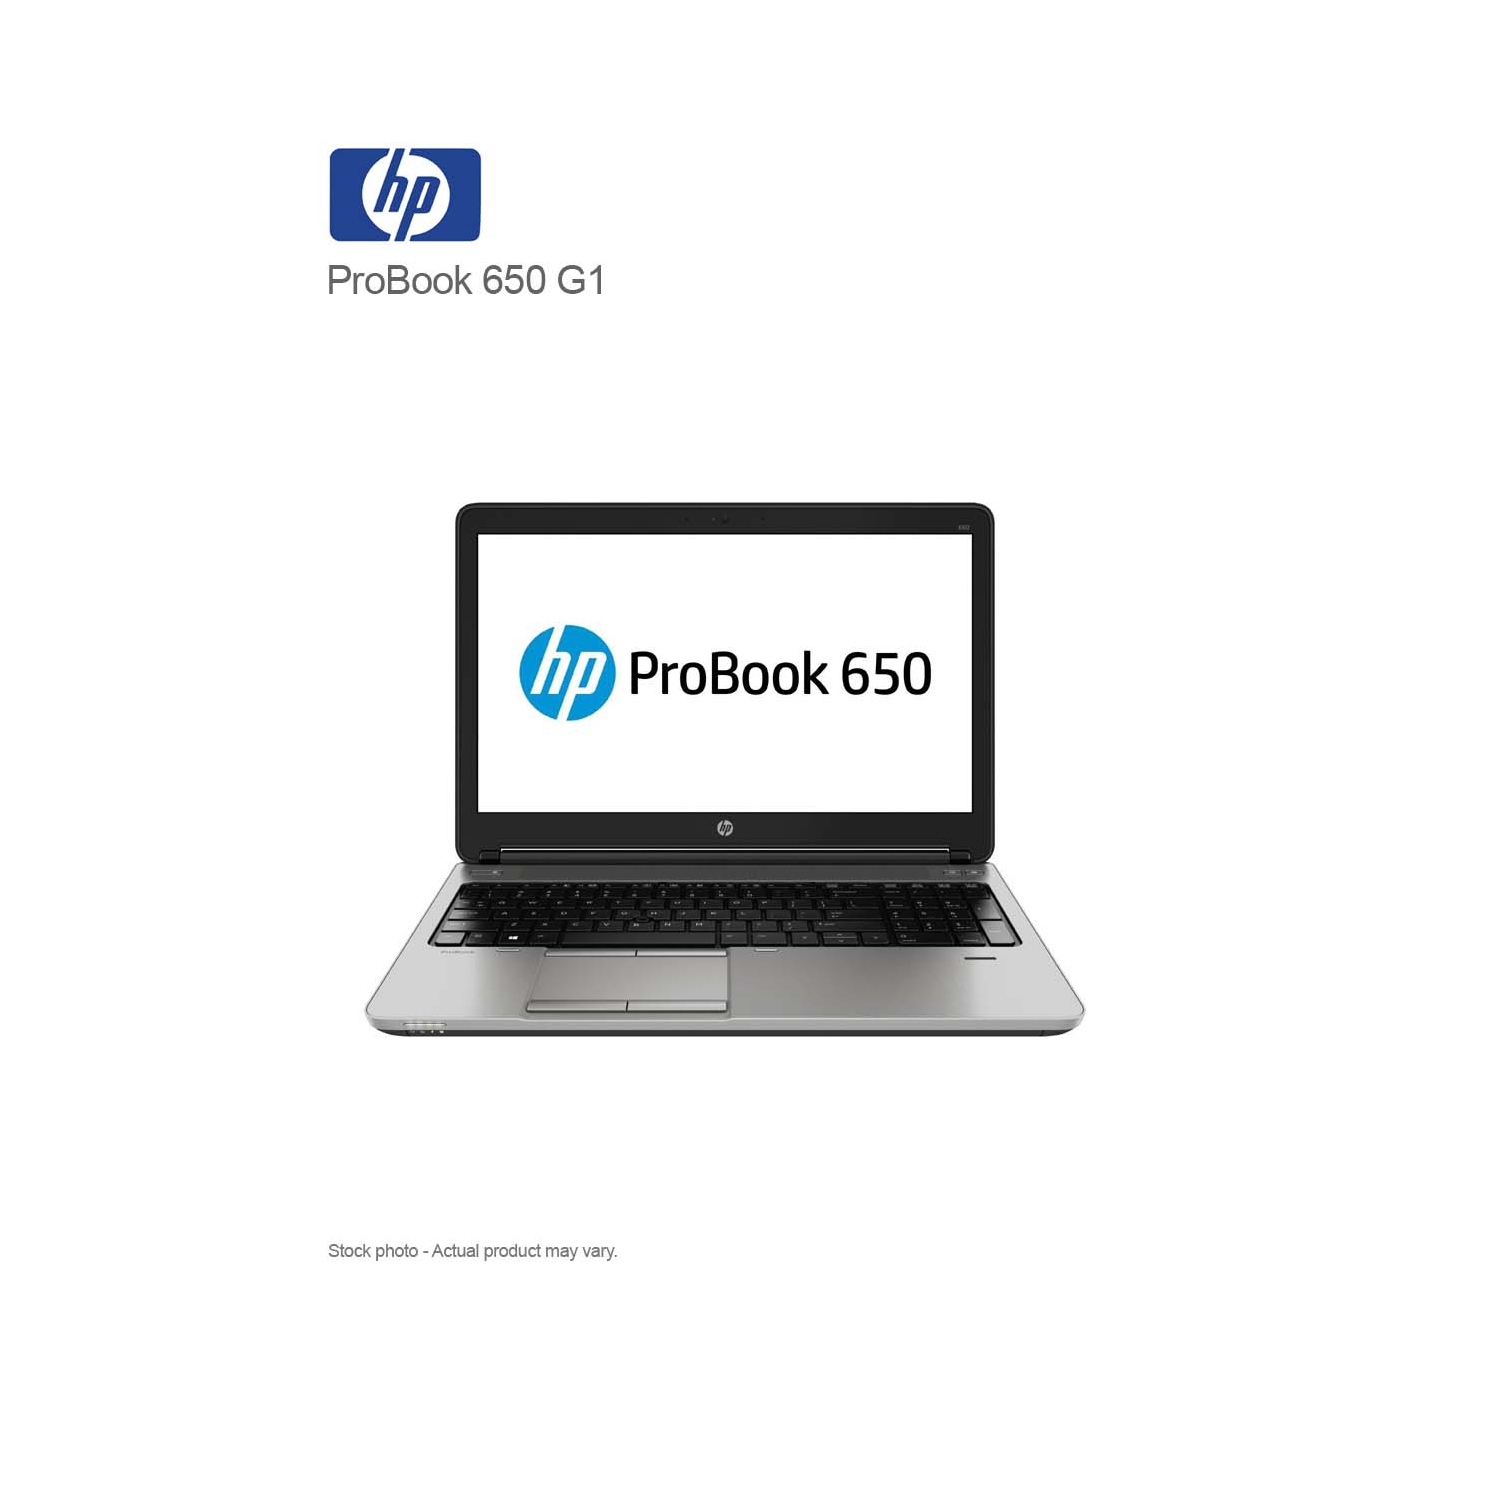 Refurbished (Excellent) - HP ProBook 650 G1 Core i5-4210M, 8GB, 240 GB SSD, 15.6"Â³ HD, WIN 10 PRO